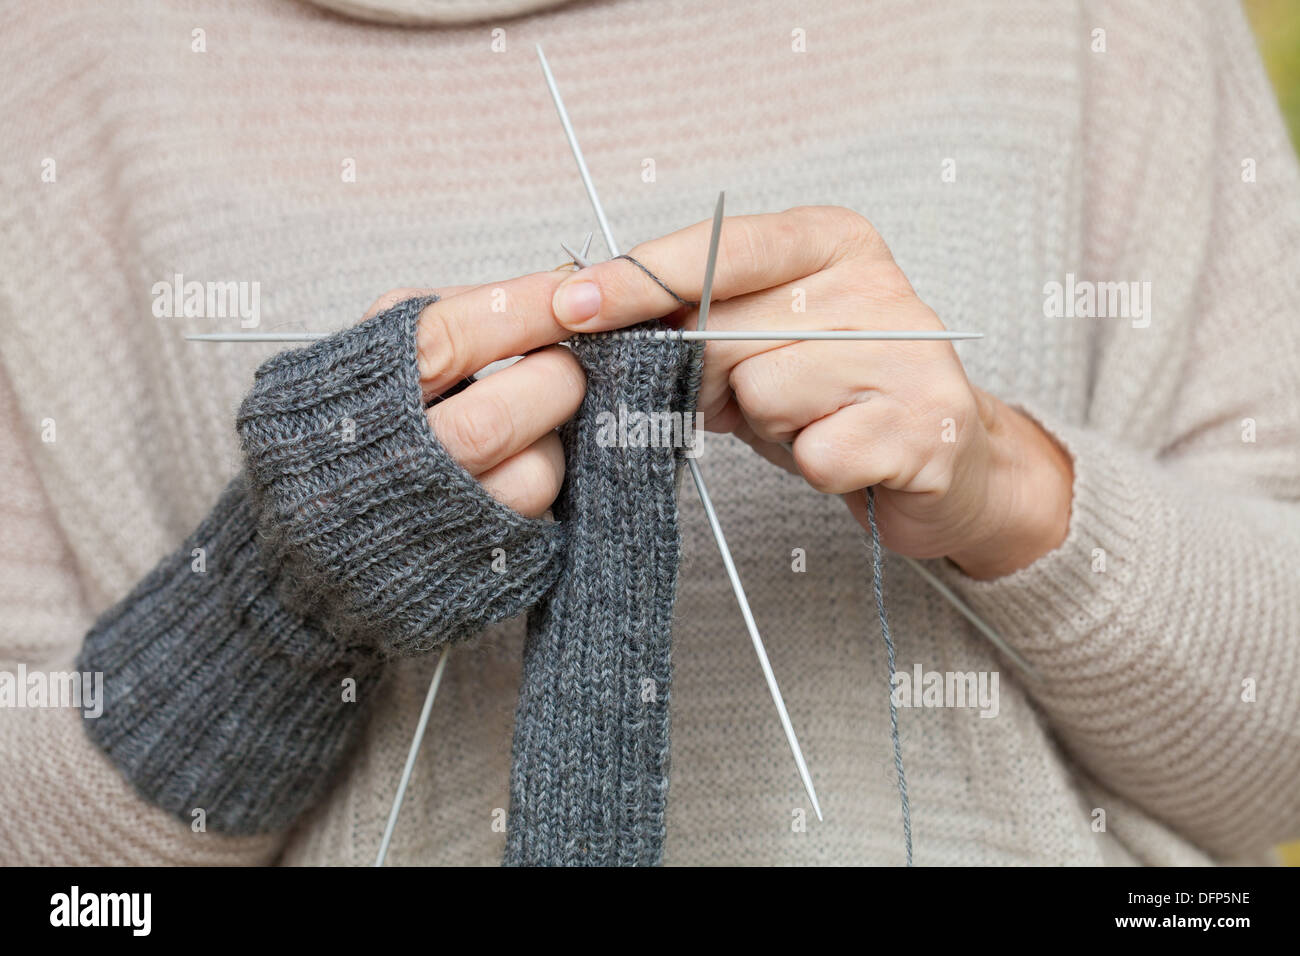 knitting emergency - female hands knitting one fingerless mitt while wearing the ready one, five-needles method Stock Photo